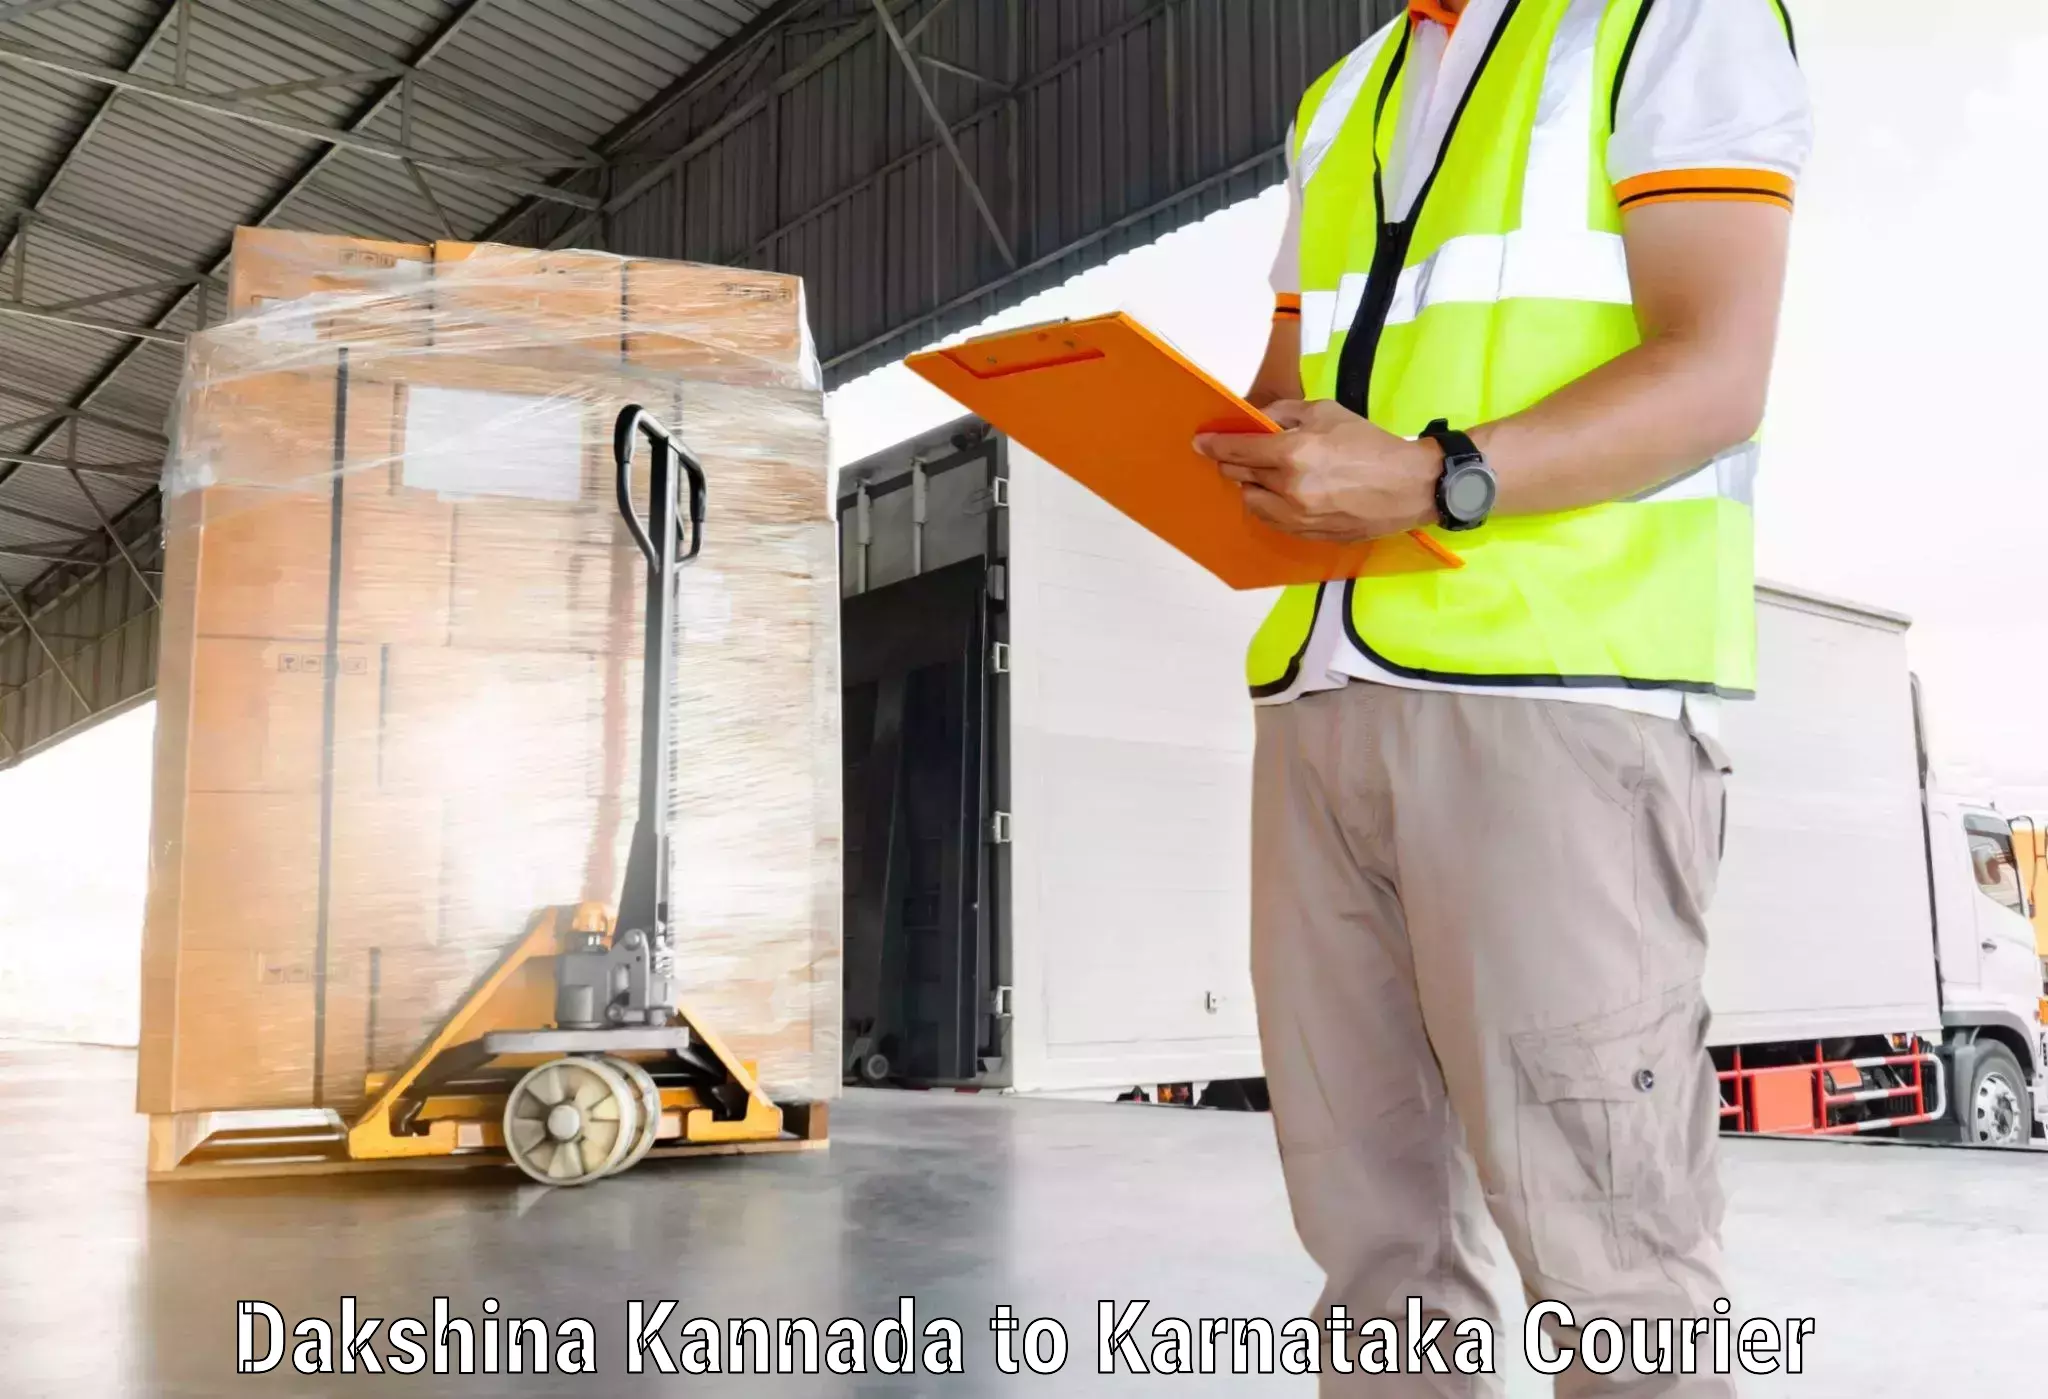 On-demand delivery in Dakshina Kannada to Hubli